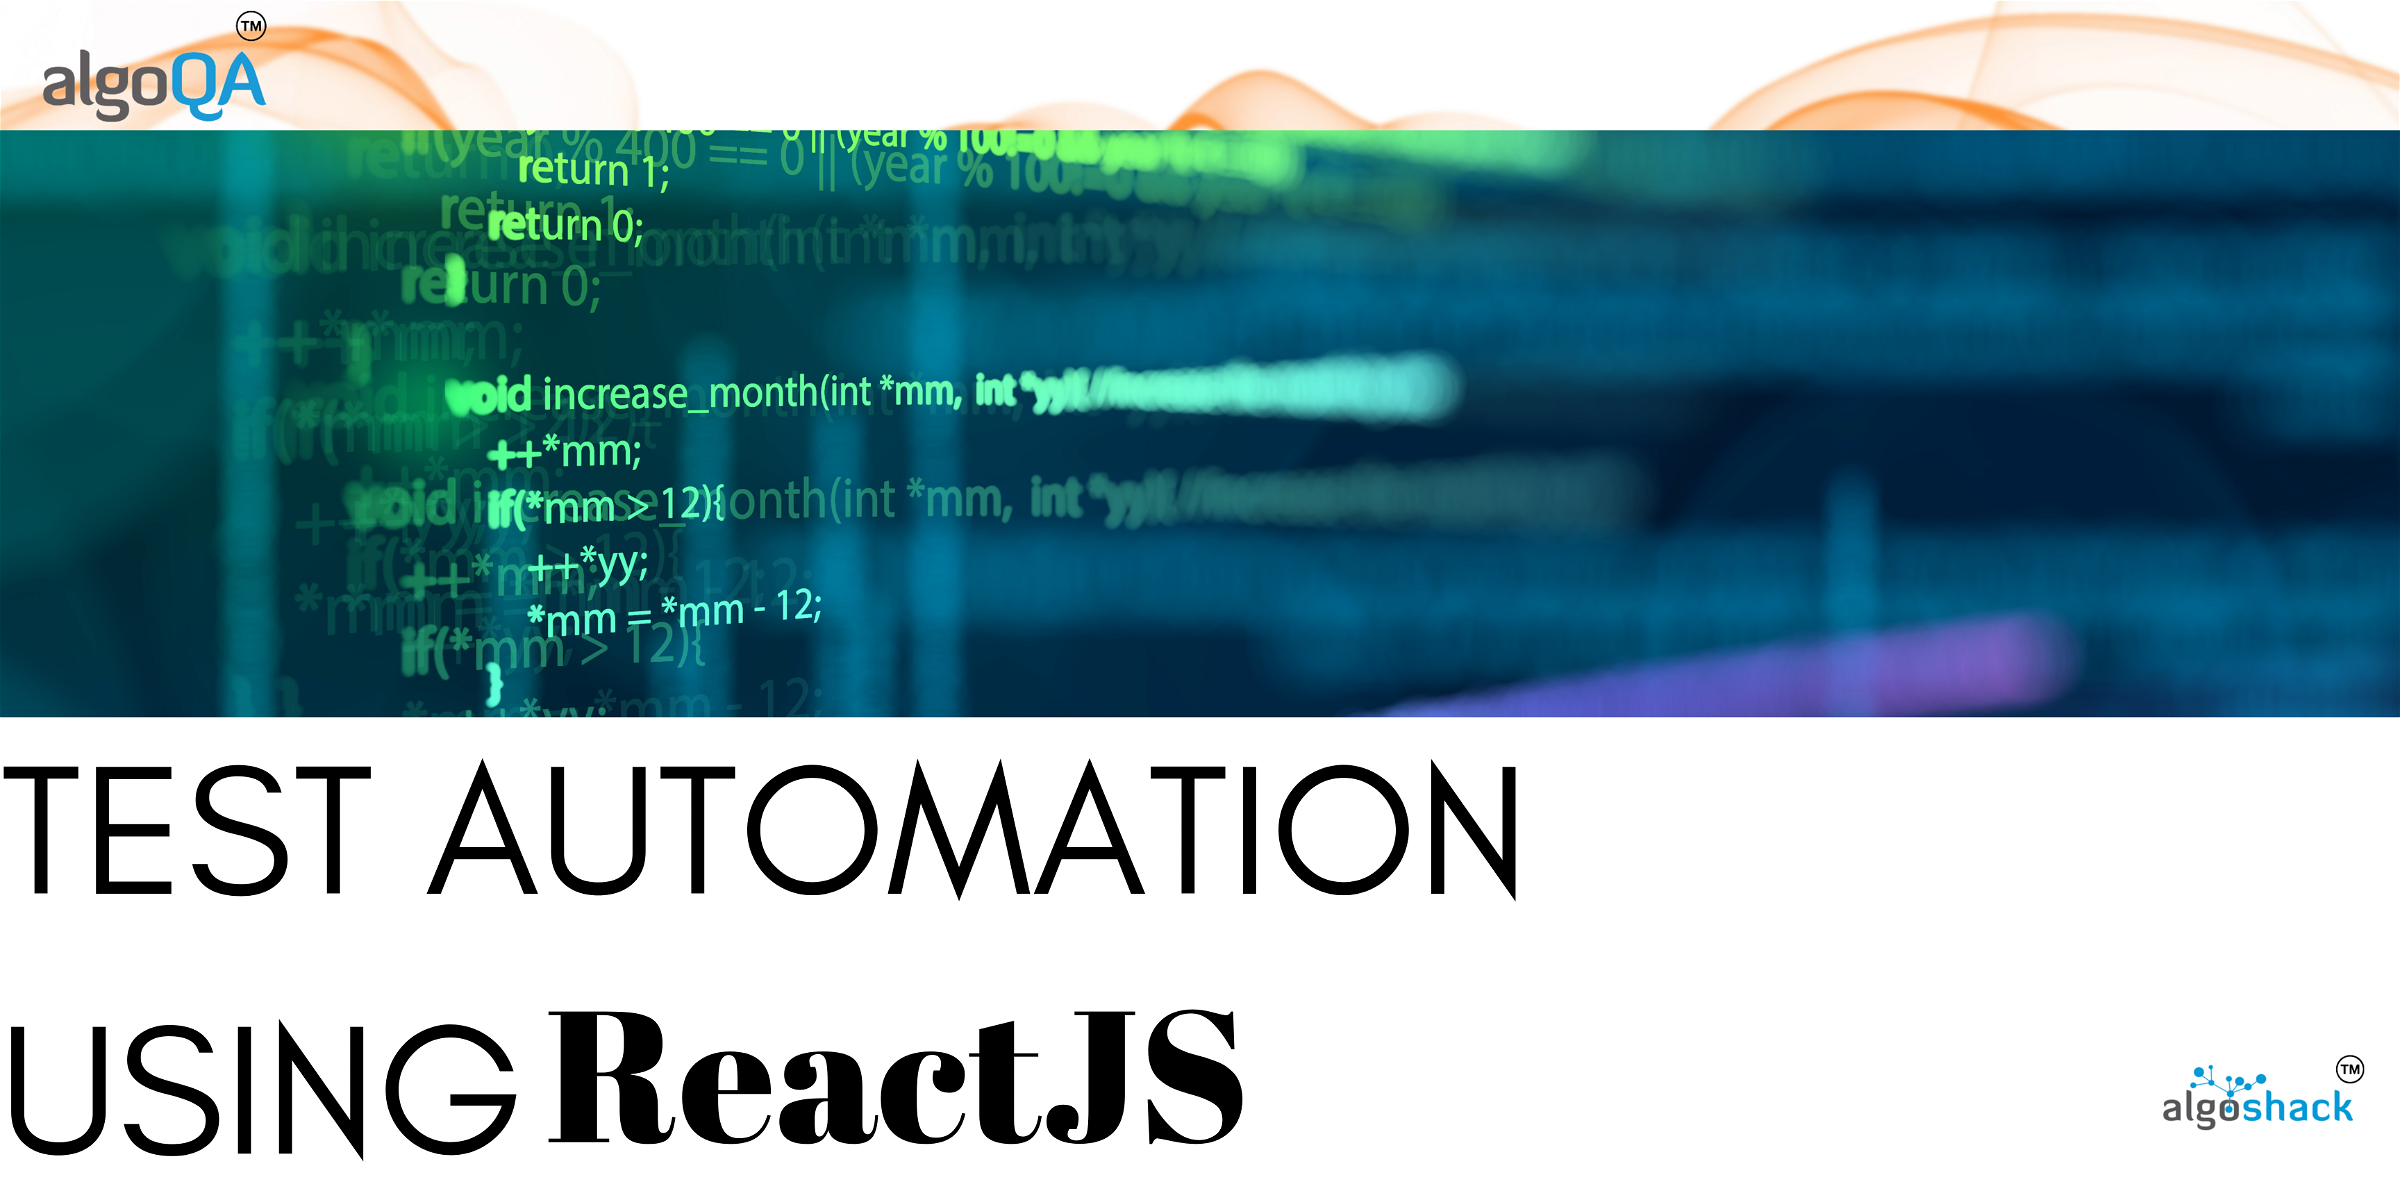 Test automation using ReactJS